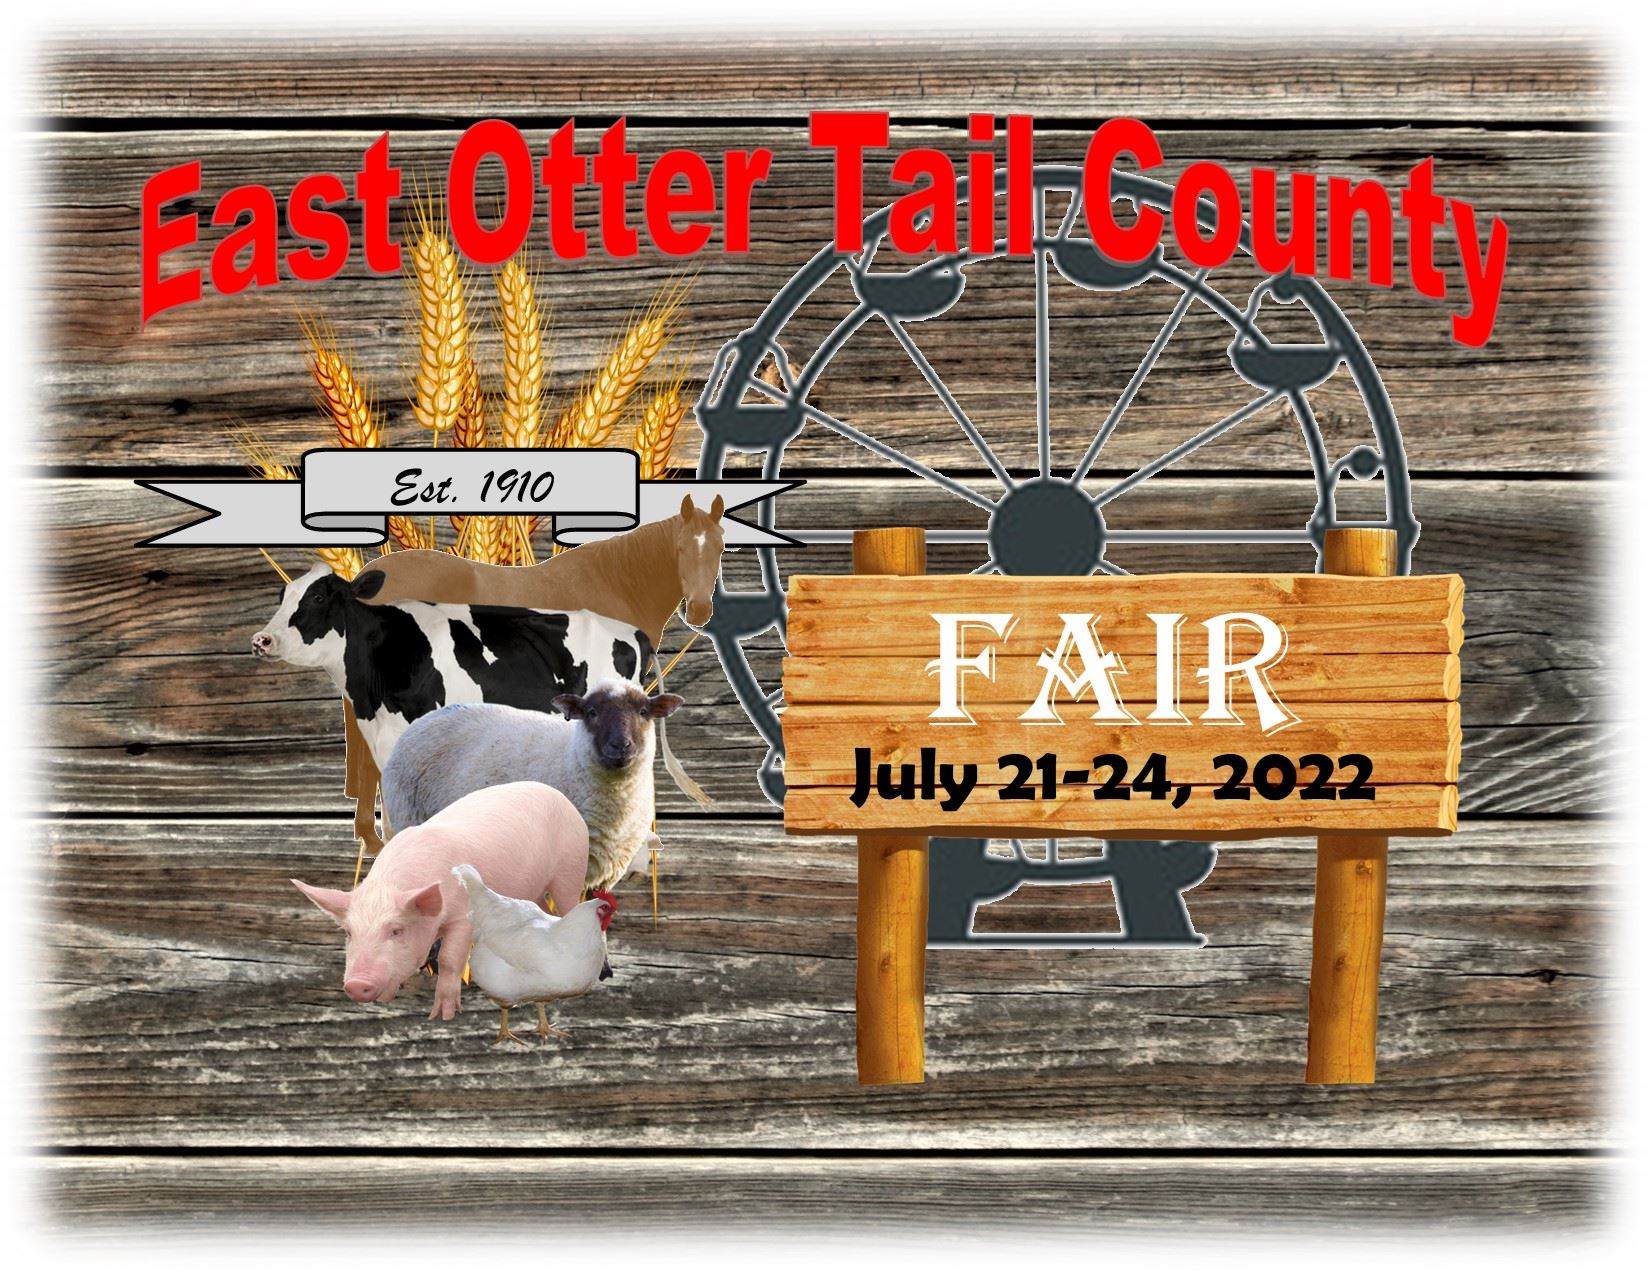 East Otter Tail County Fair